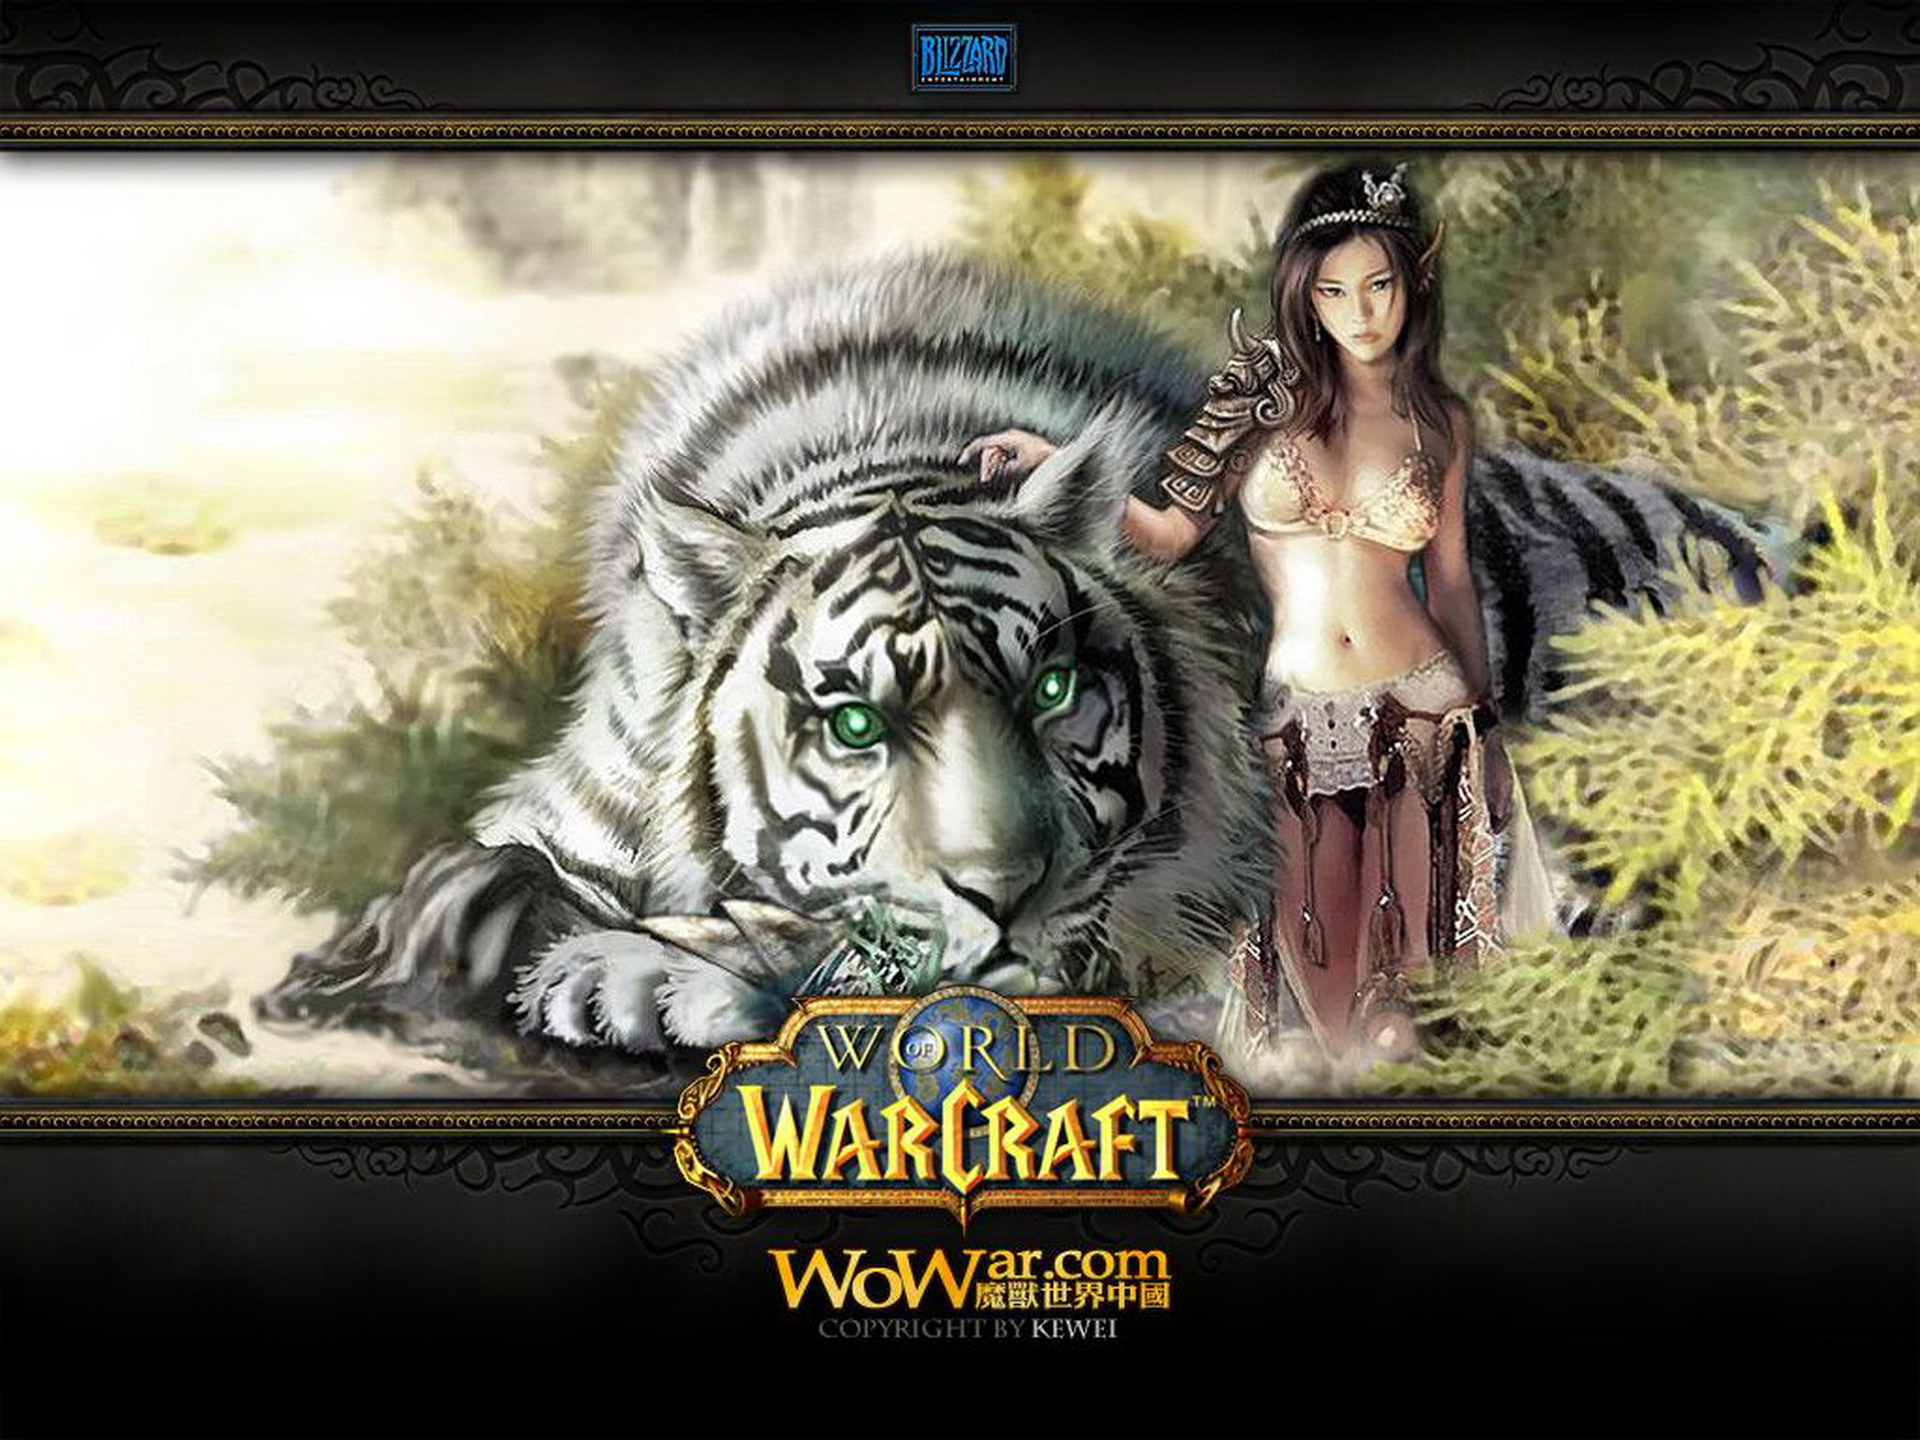 world of warcraft download wallpapers game Desktop Backgrounds for